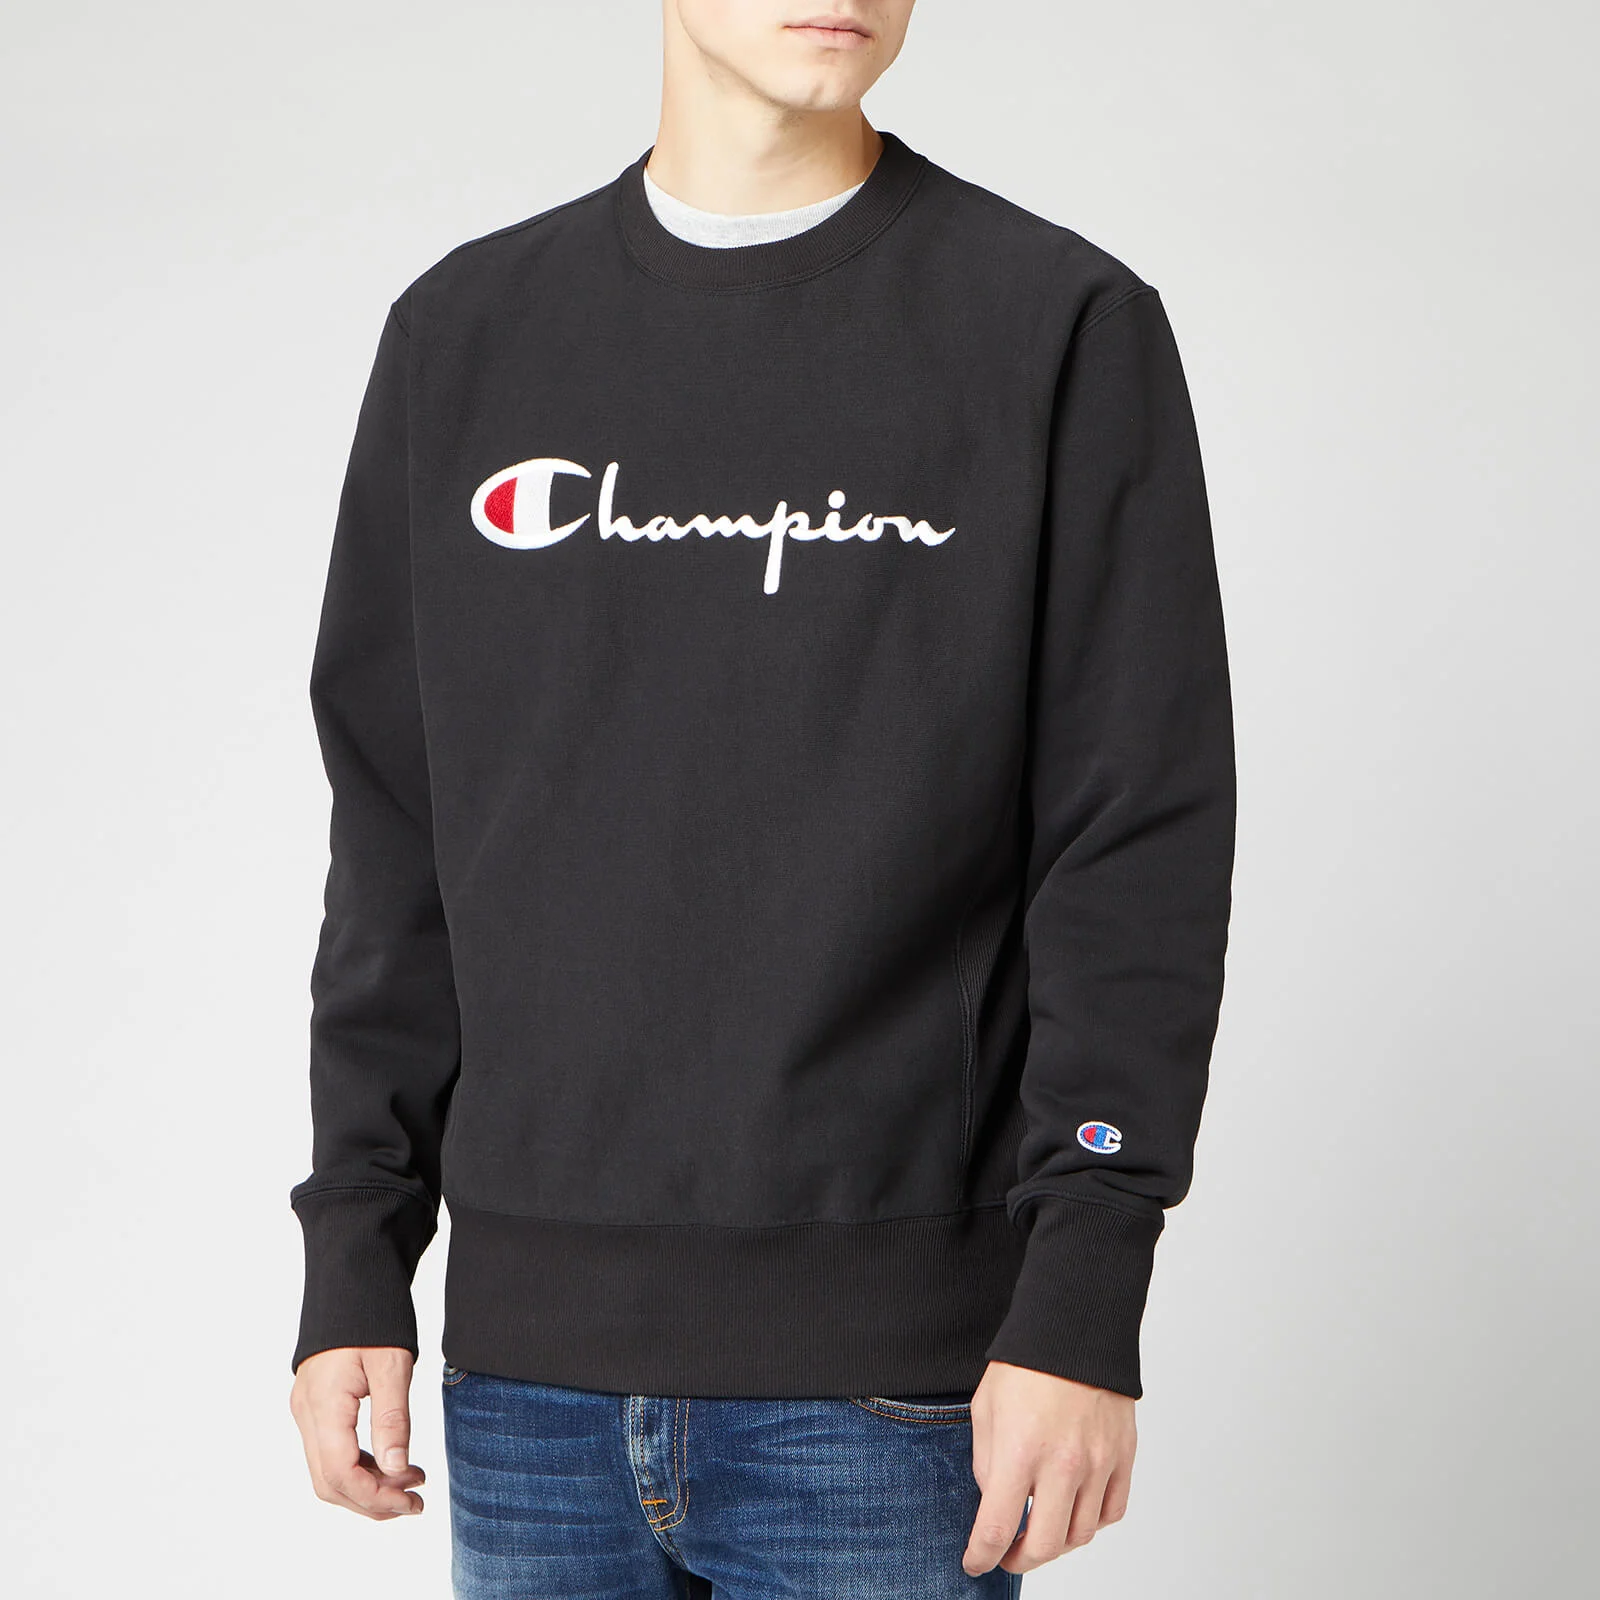 Champion Men's Big Script Sweatshirt - Black Image 1